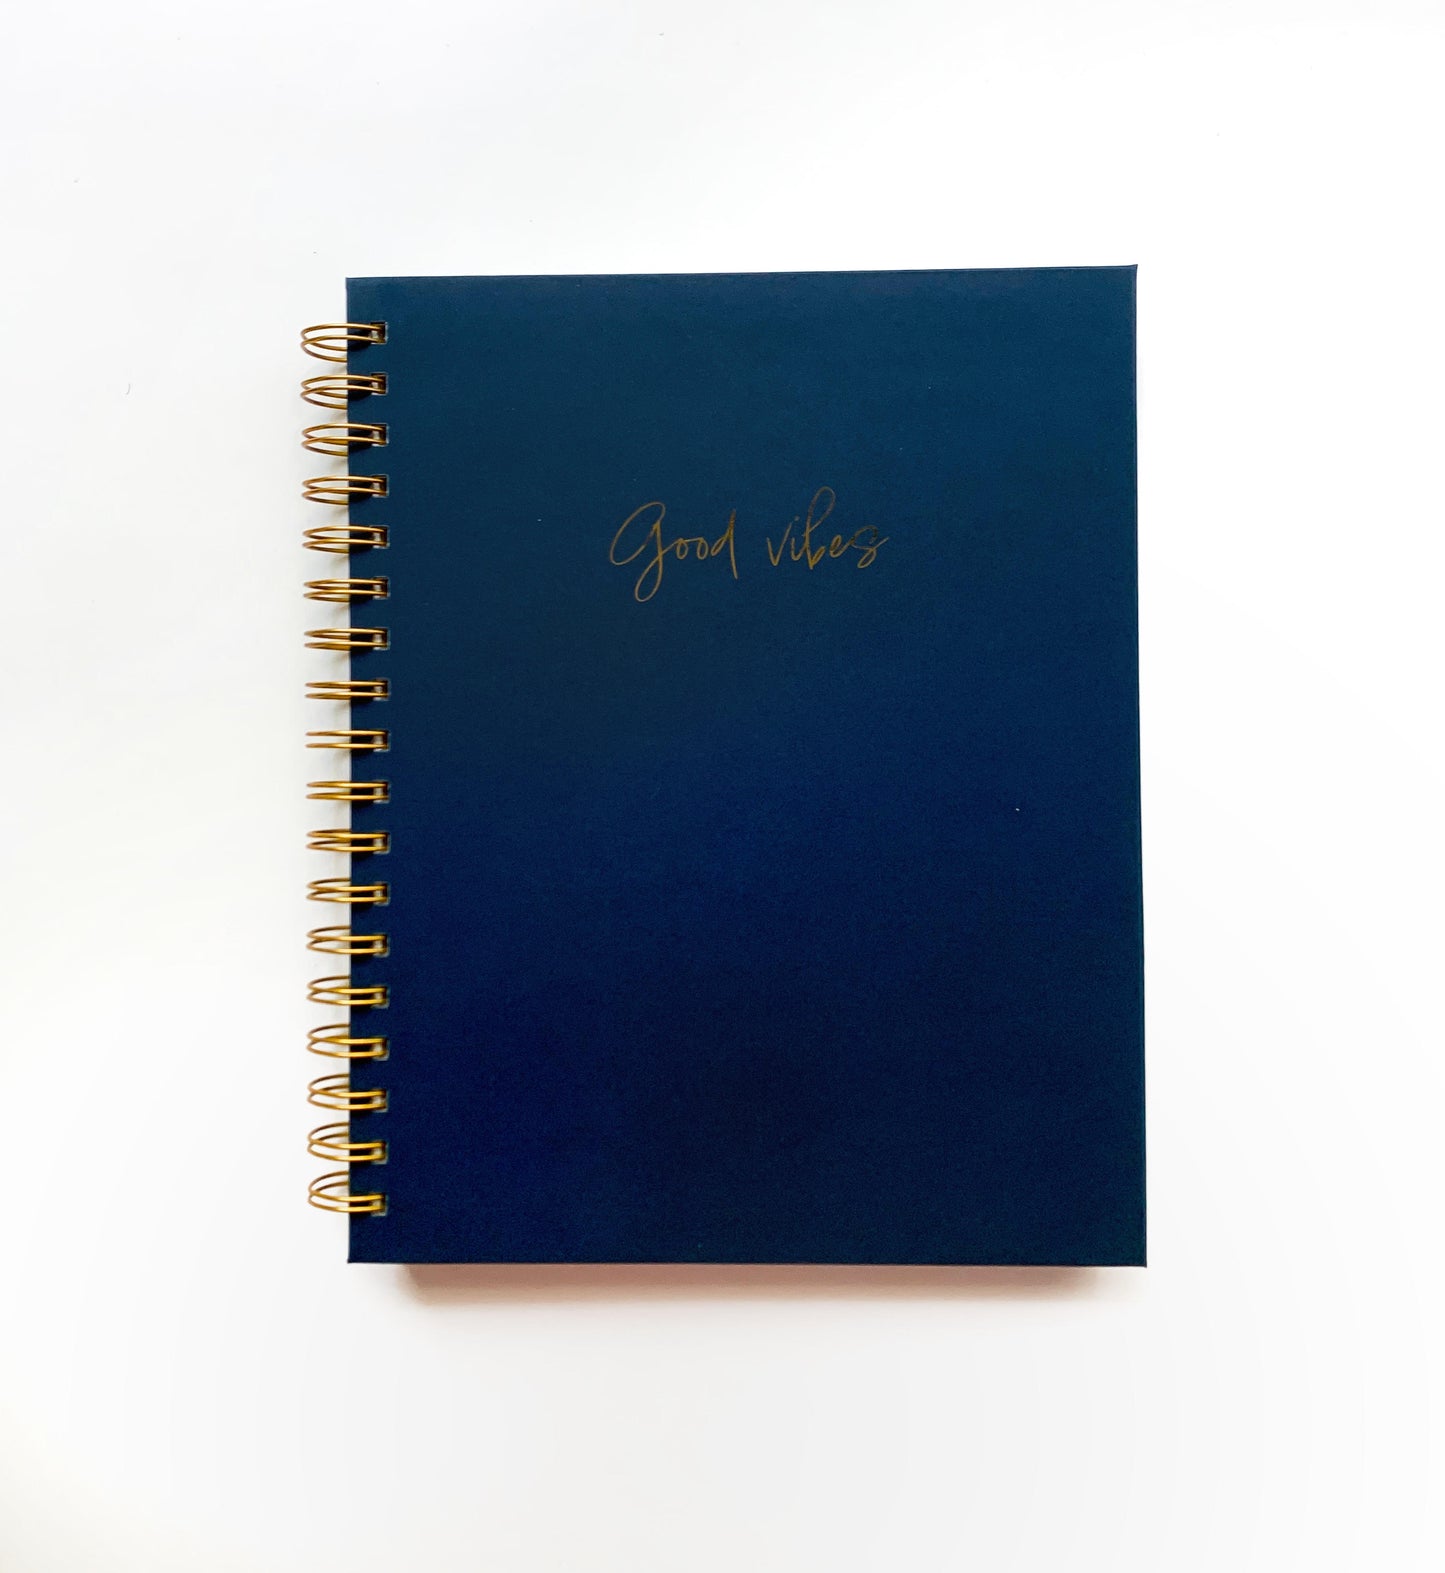 Dark Blue Notebook with Custom Text